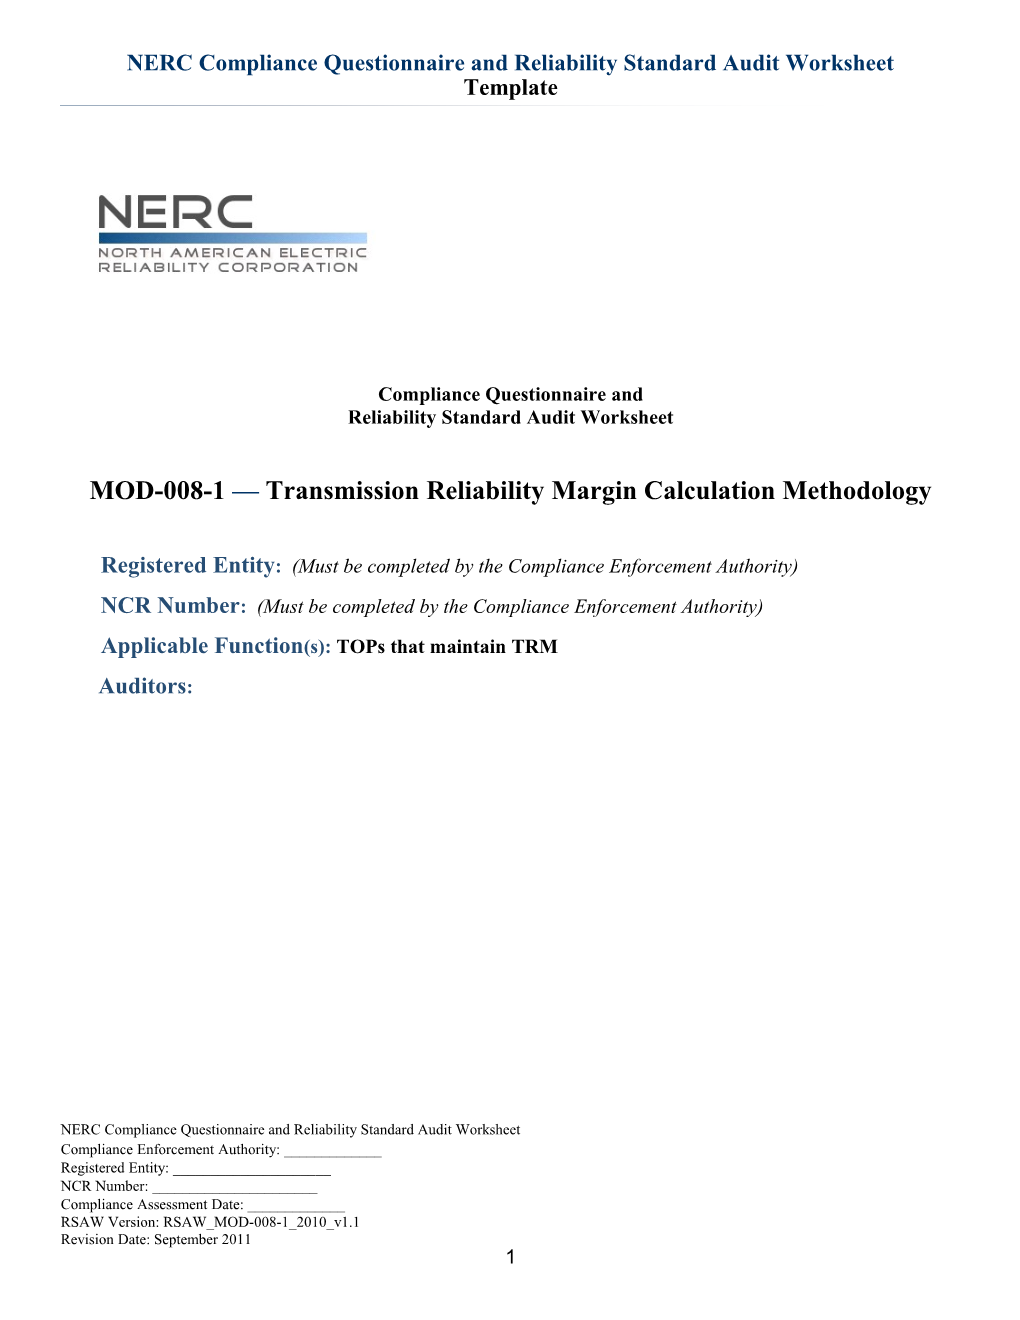 Transmission Reliability Margin Calculation Methodology